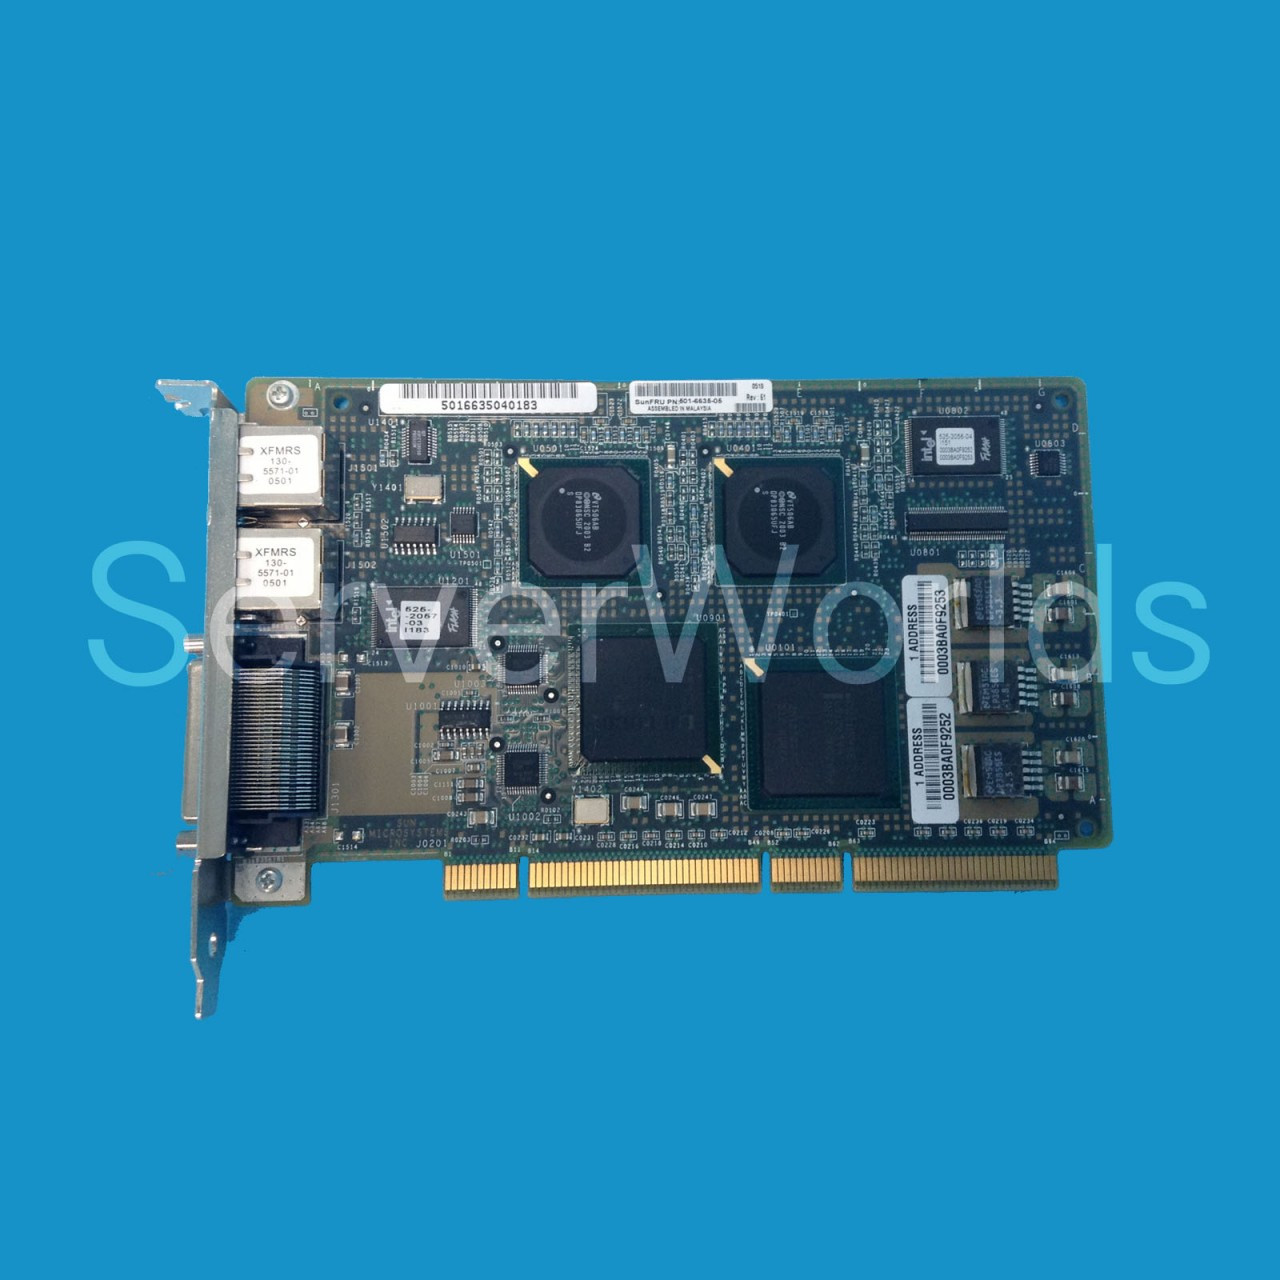 Sun 501-6635 Dual Gigabit Ethernet/SCSI Card X4422A